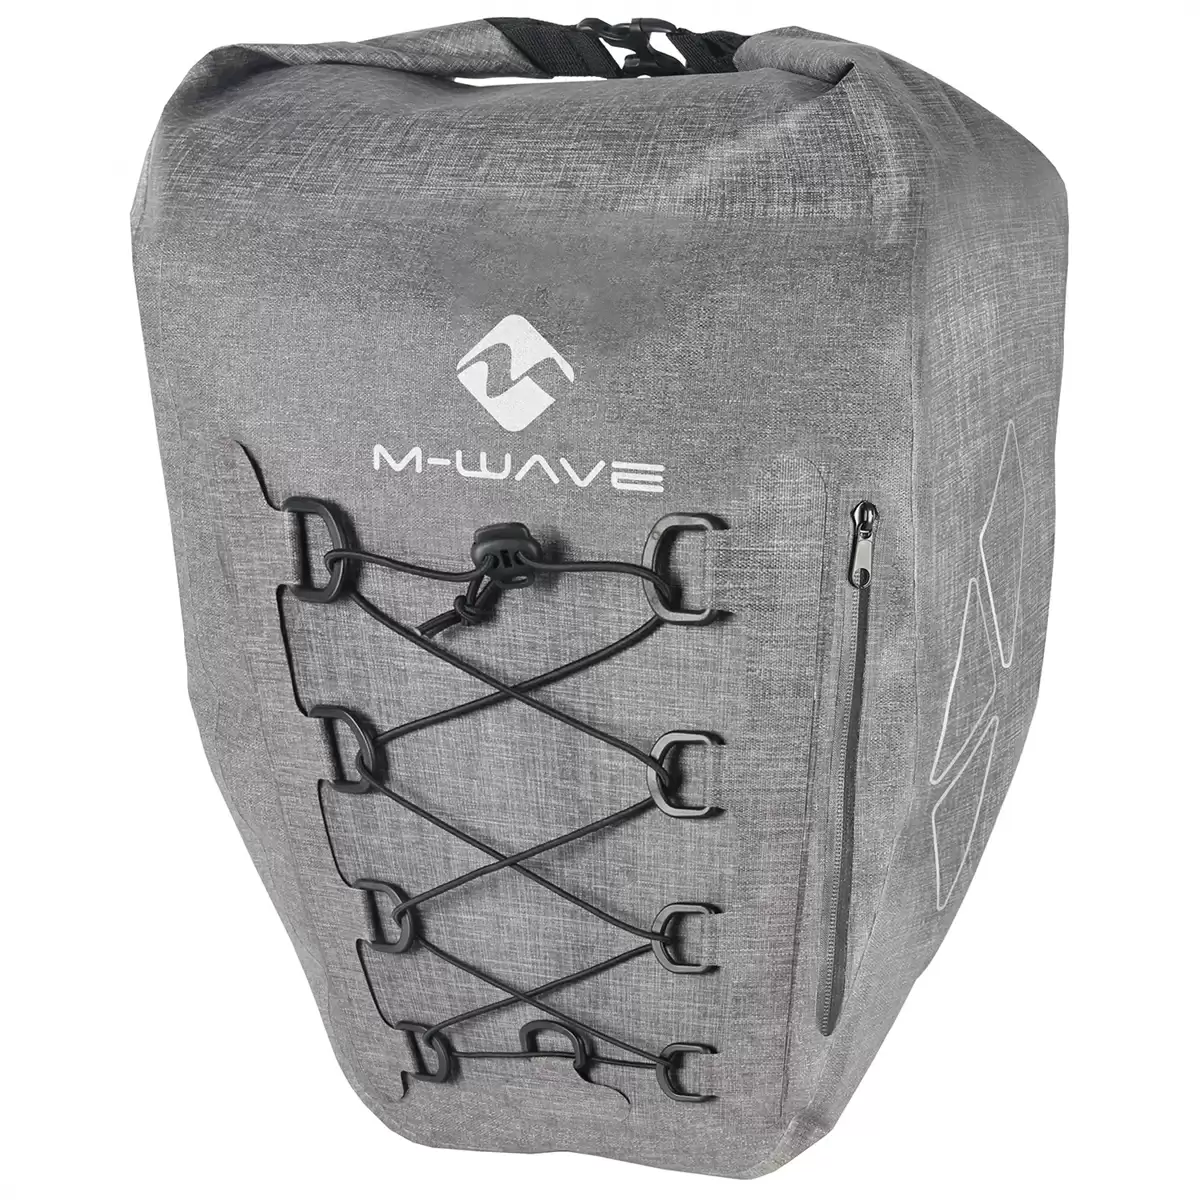 Suburban Carry bikepacking bag luggage rack mount 25 litres grey - image